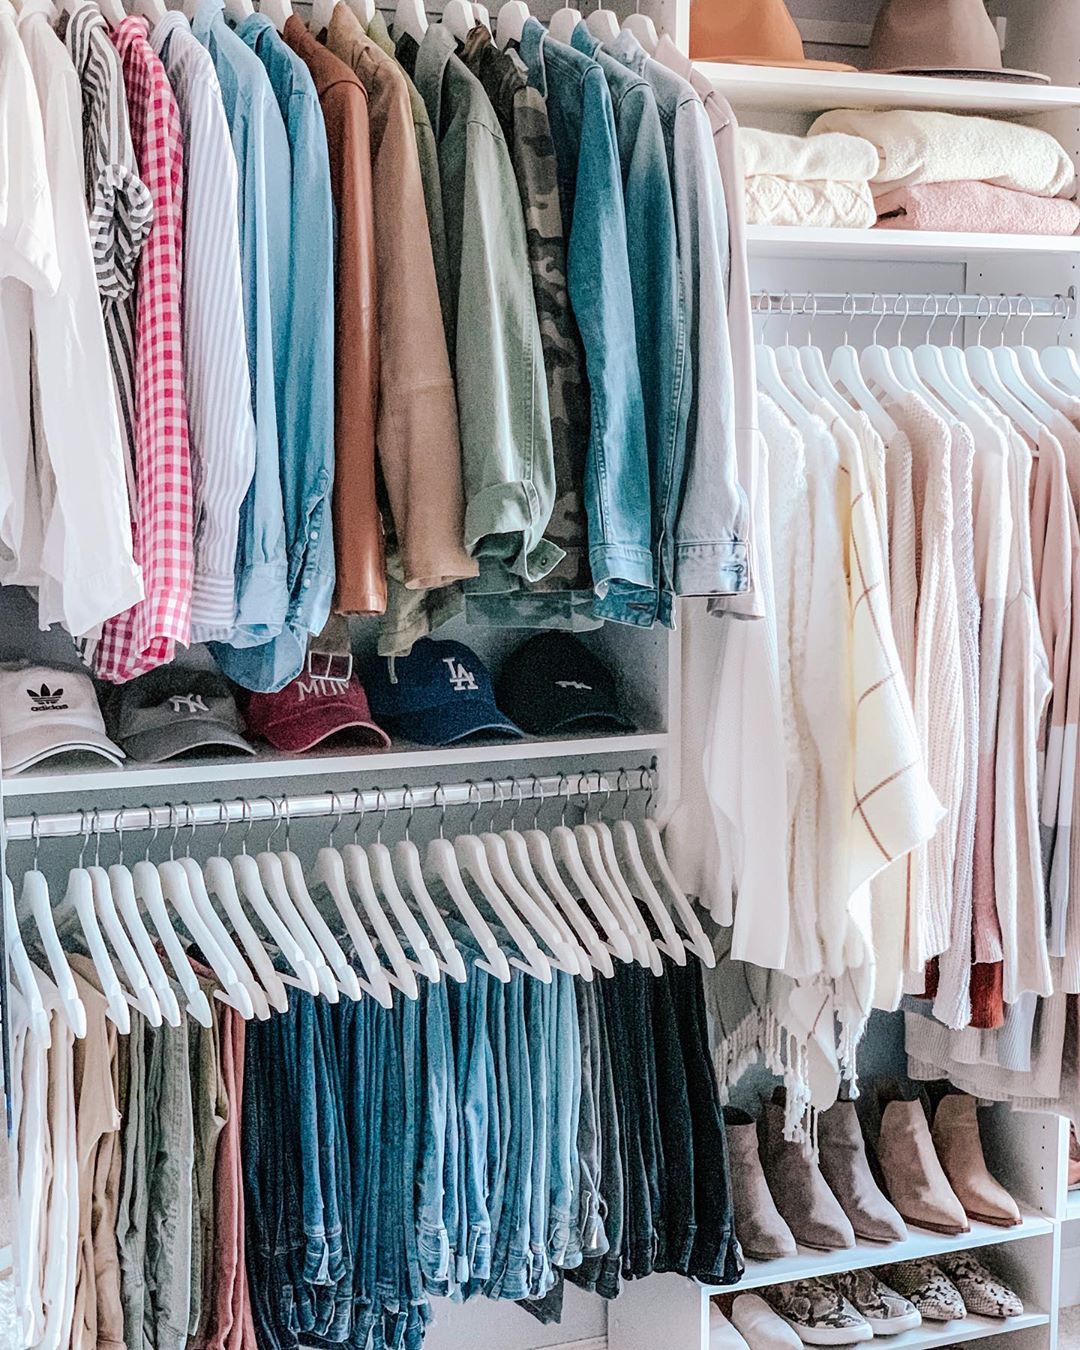 Clothing in closet on wood hangers. Photo by Instagram user @seasonsinstilettos